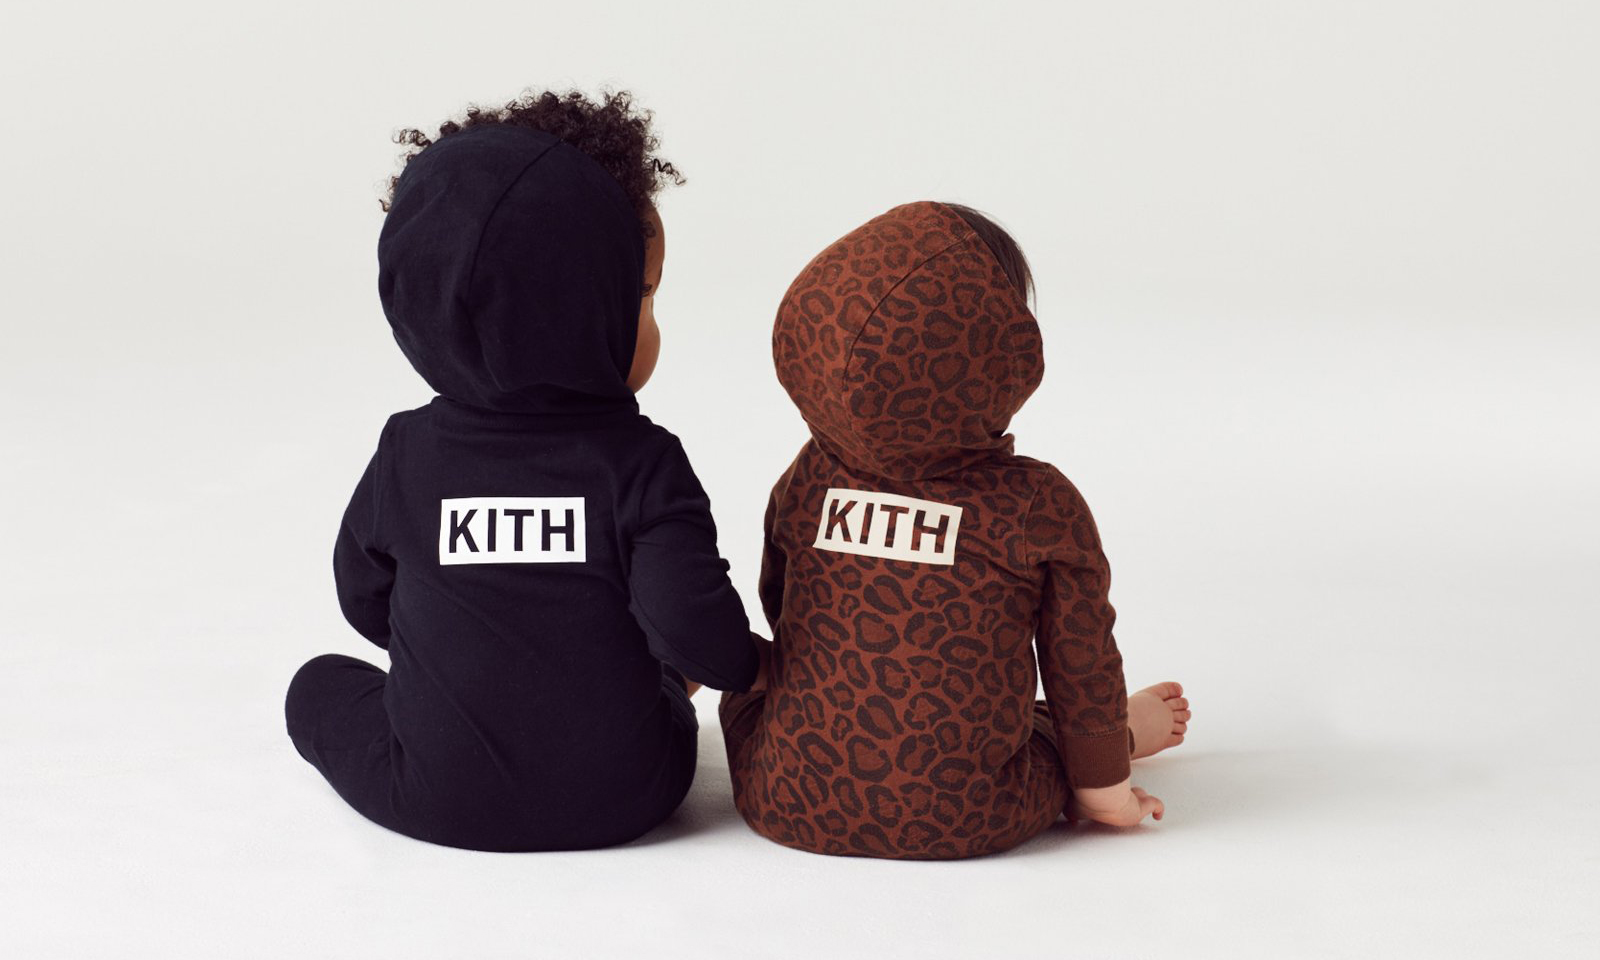 KITH 童装支线 Kidset 首次发布幼童系列